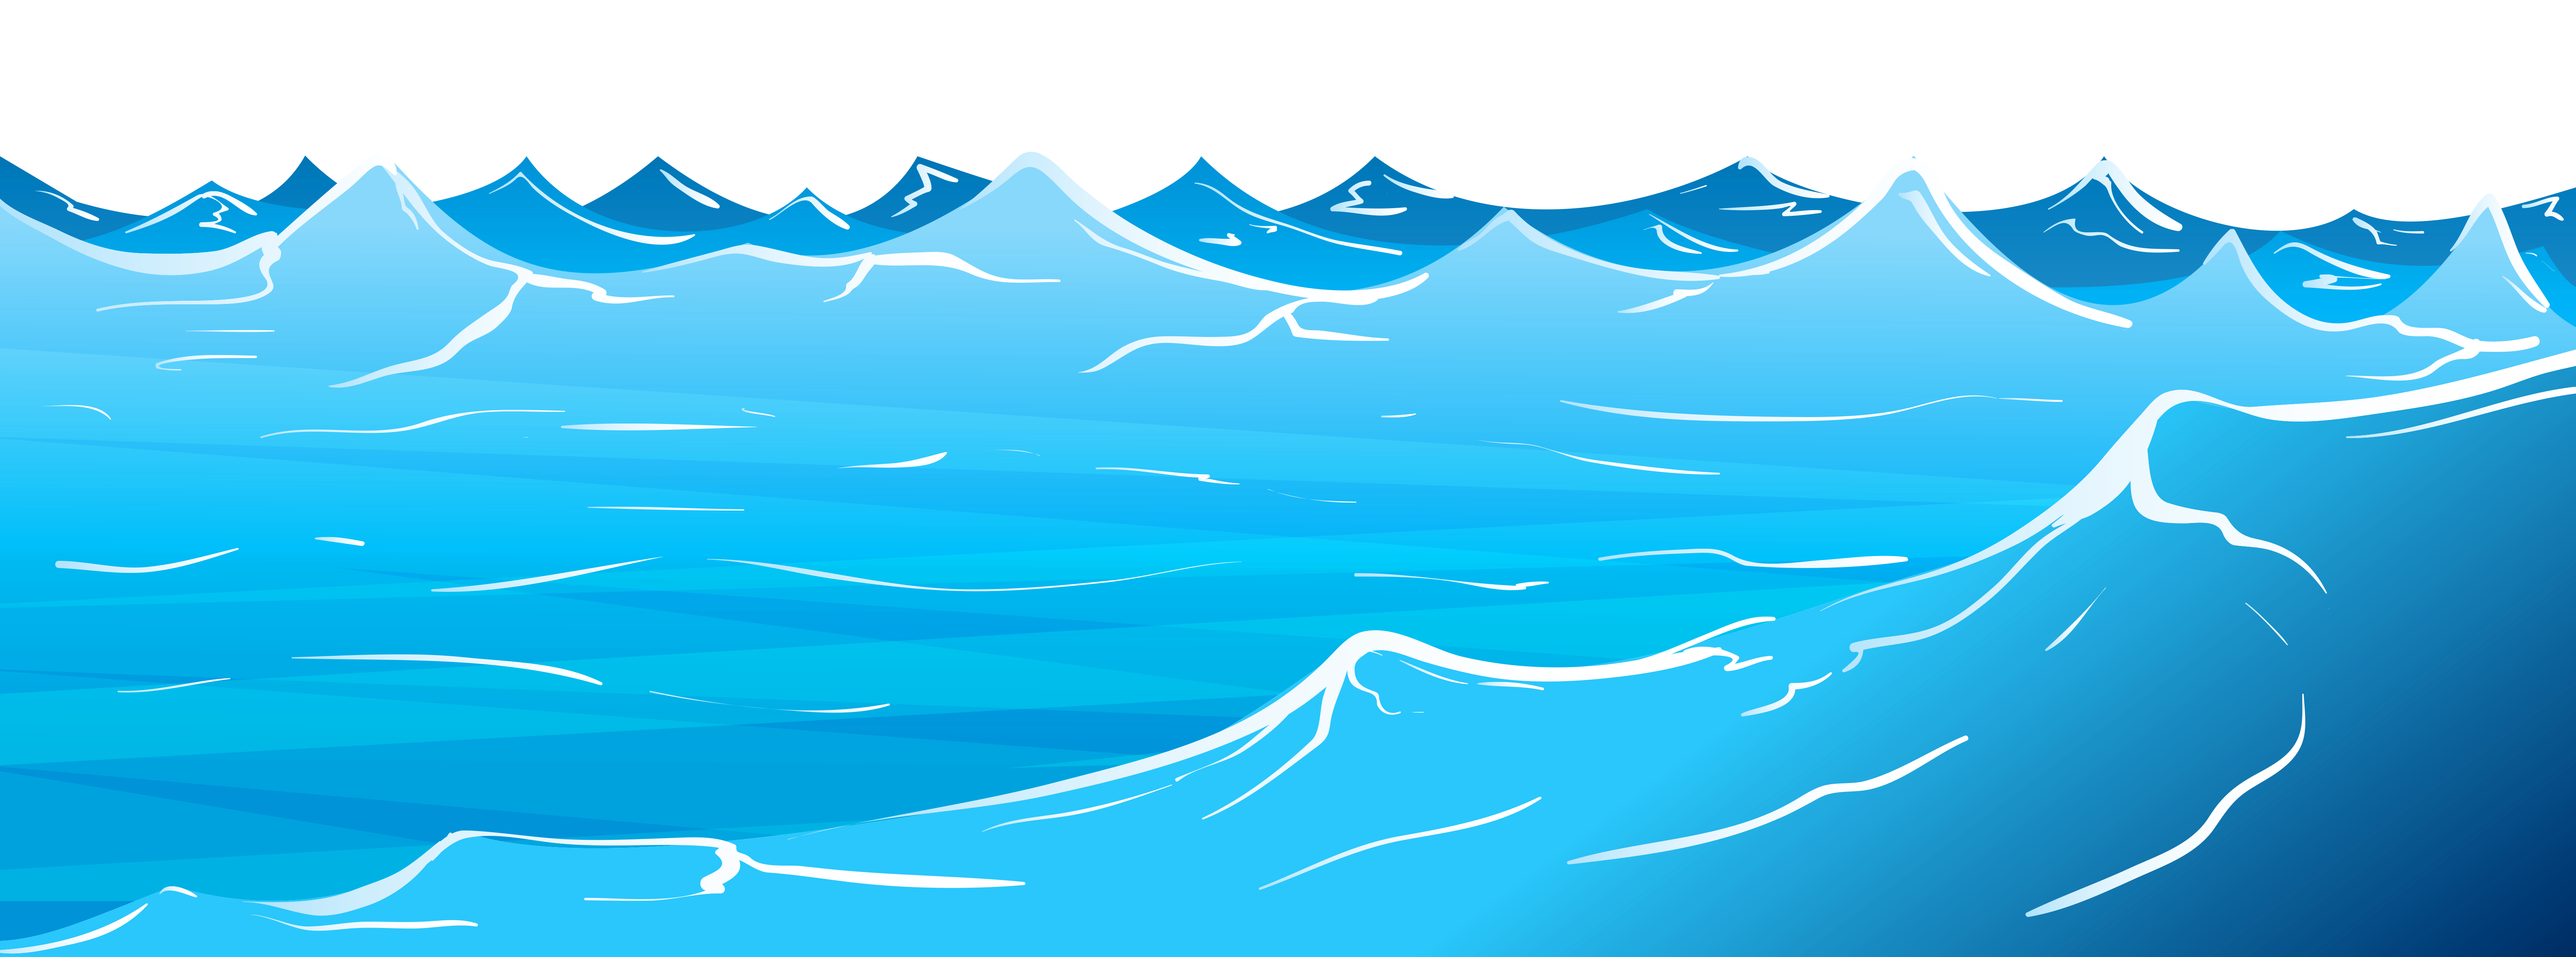 Waves ocean water clipart